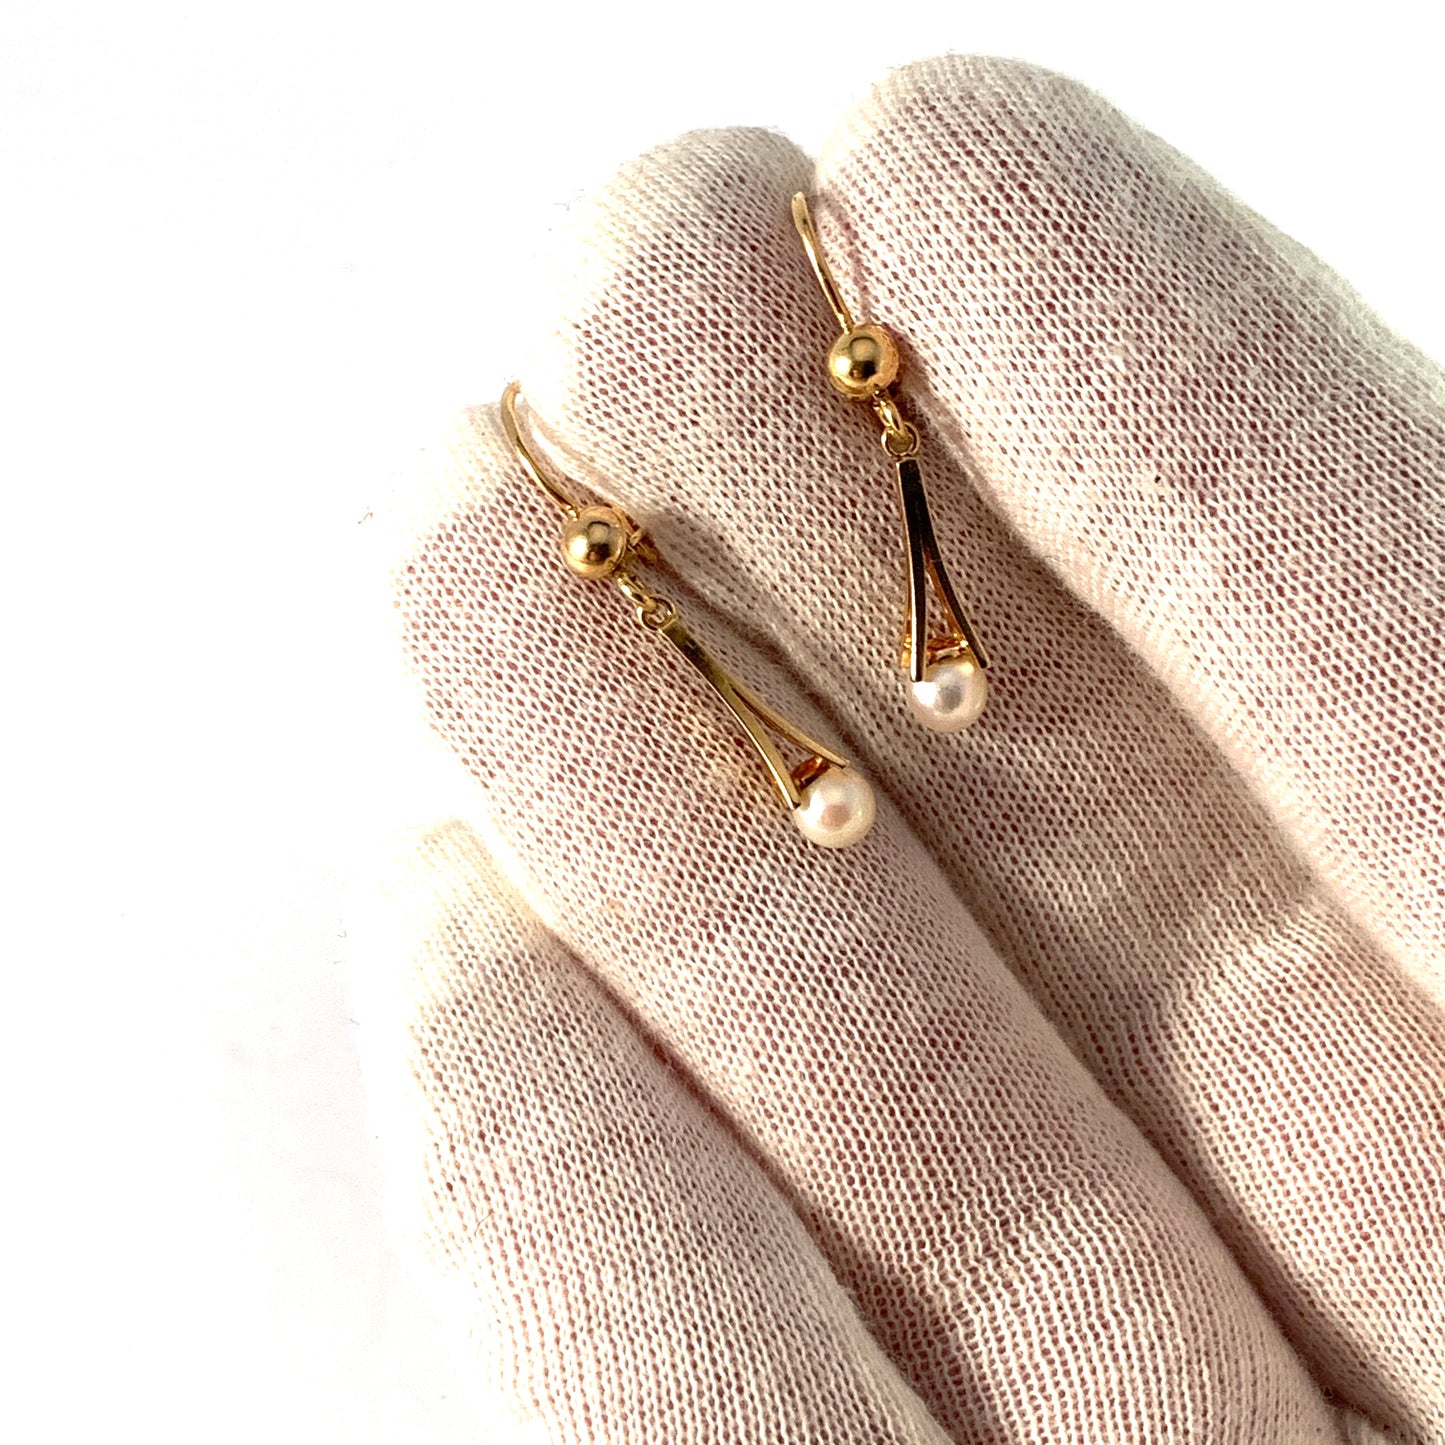 Opifors, Sweden 1960-70s. Vintage 18k Gold Cultured Pearl Earrings.